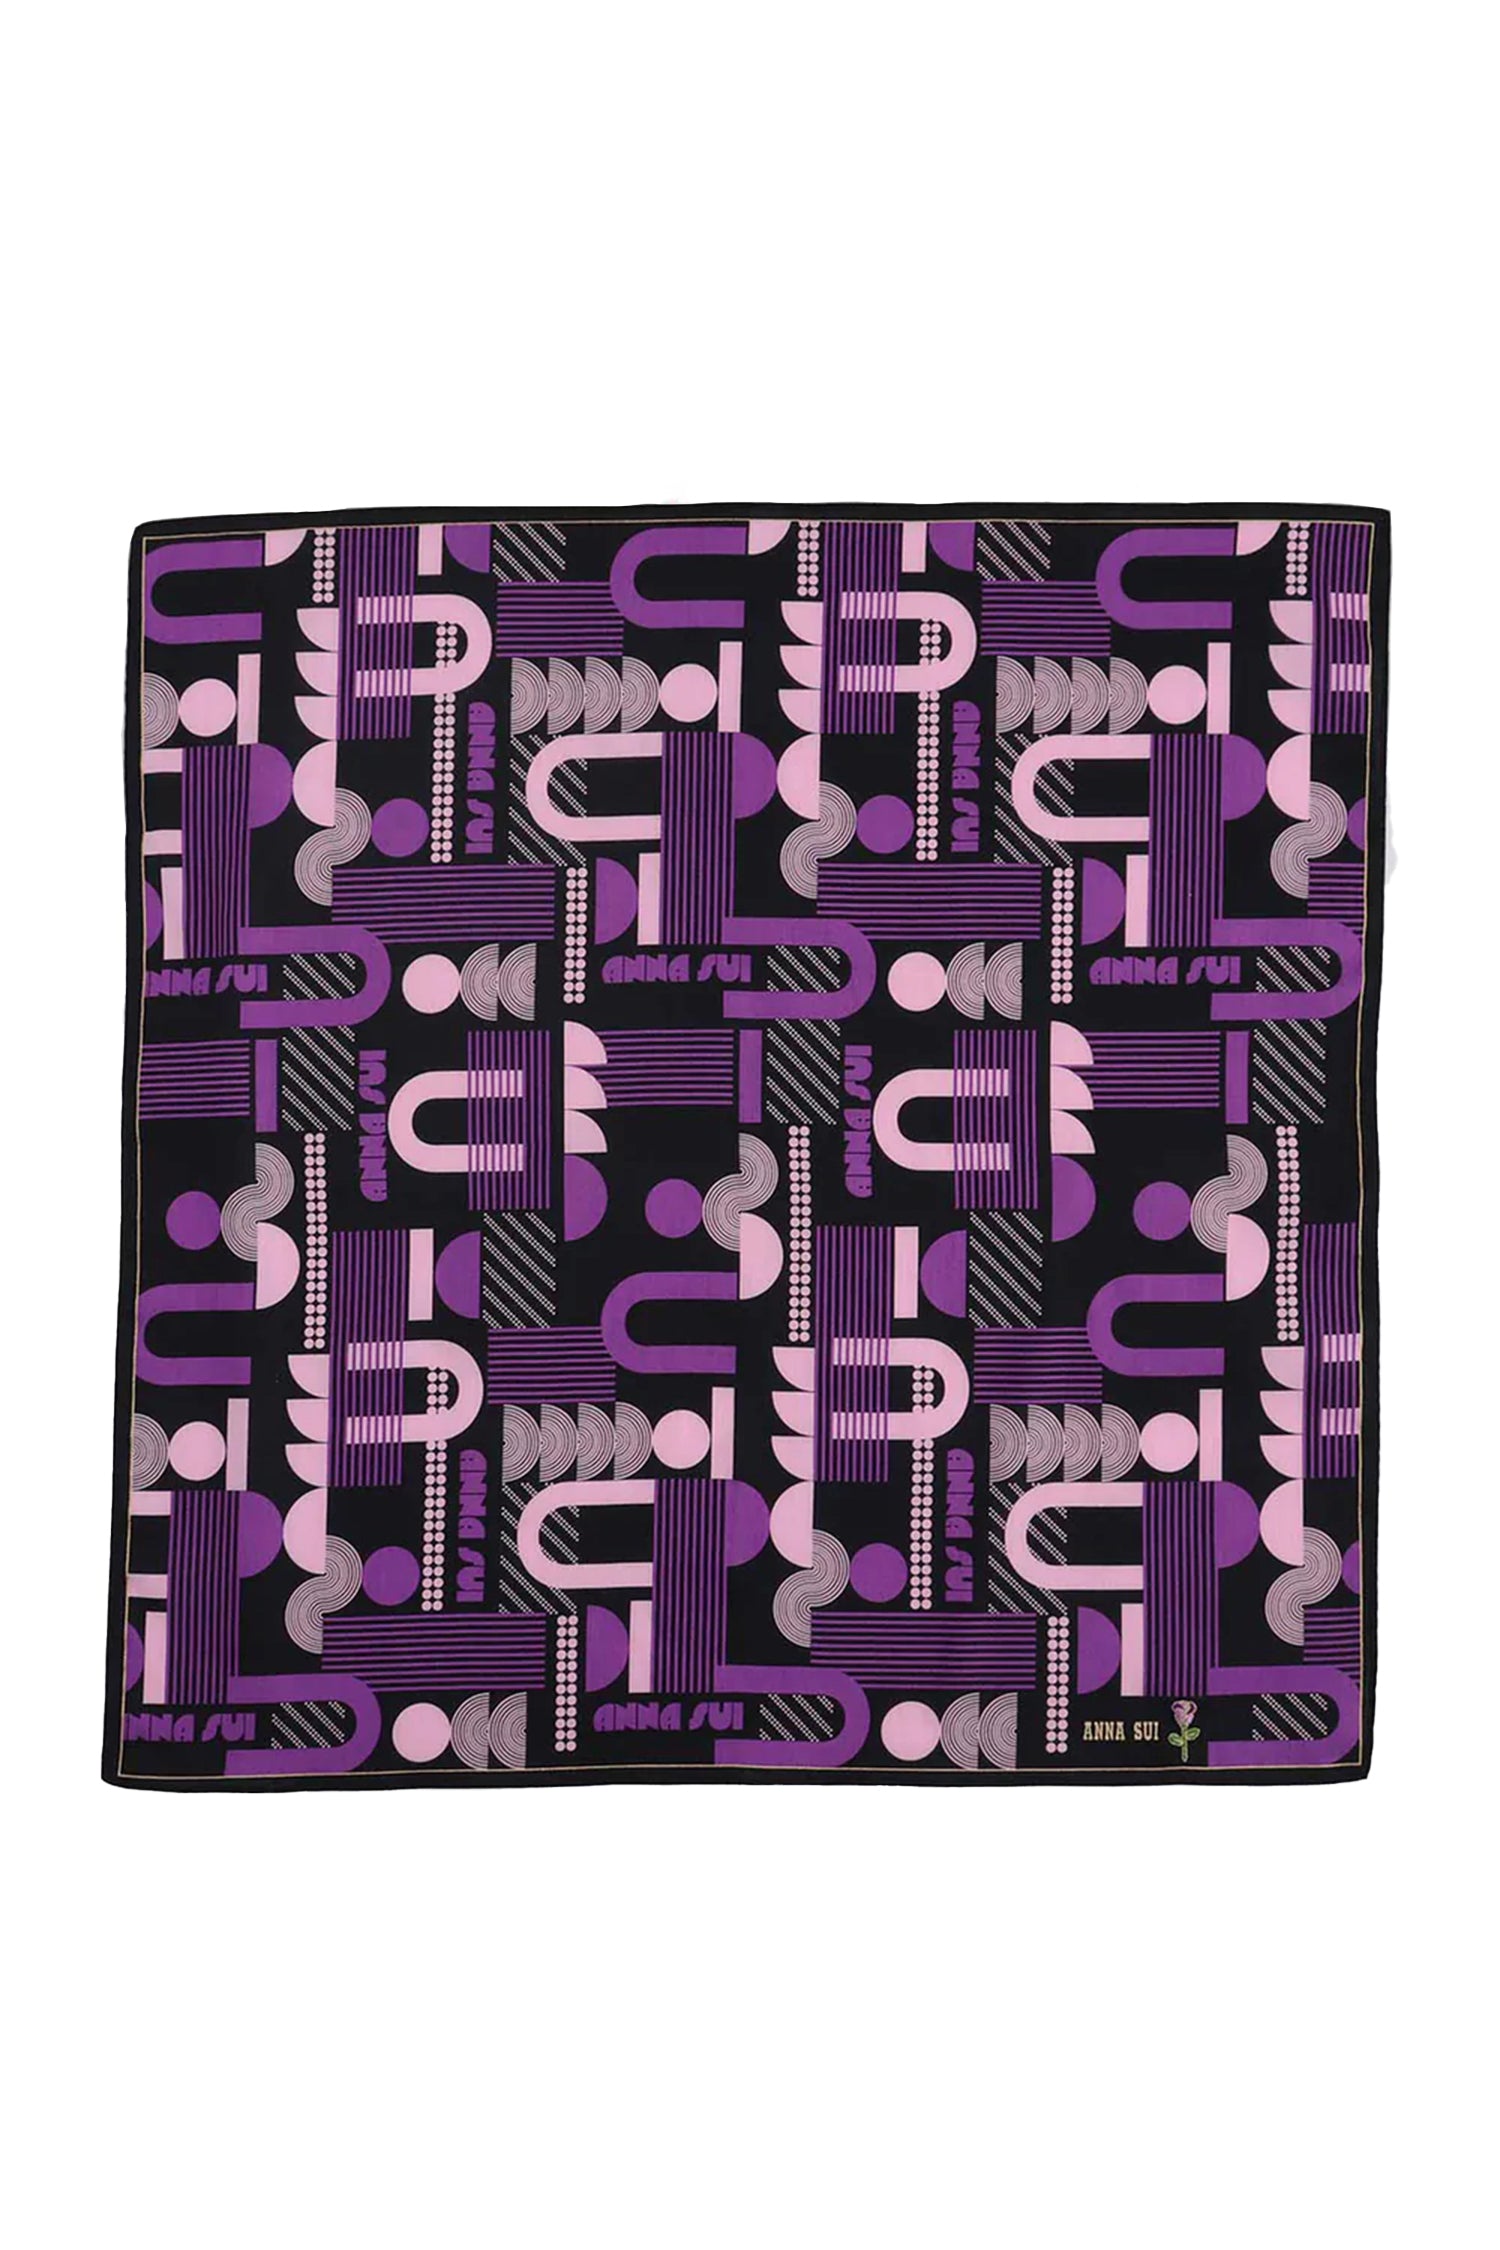 Squared Dancing Deco Handkerchief, black with purple/white lines disco design, Anna’s label, red rose